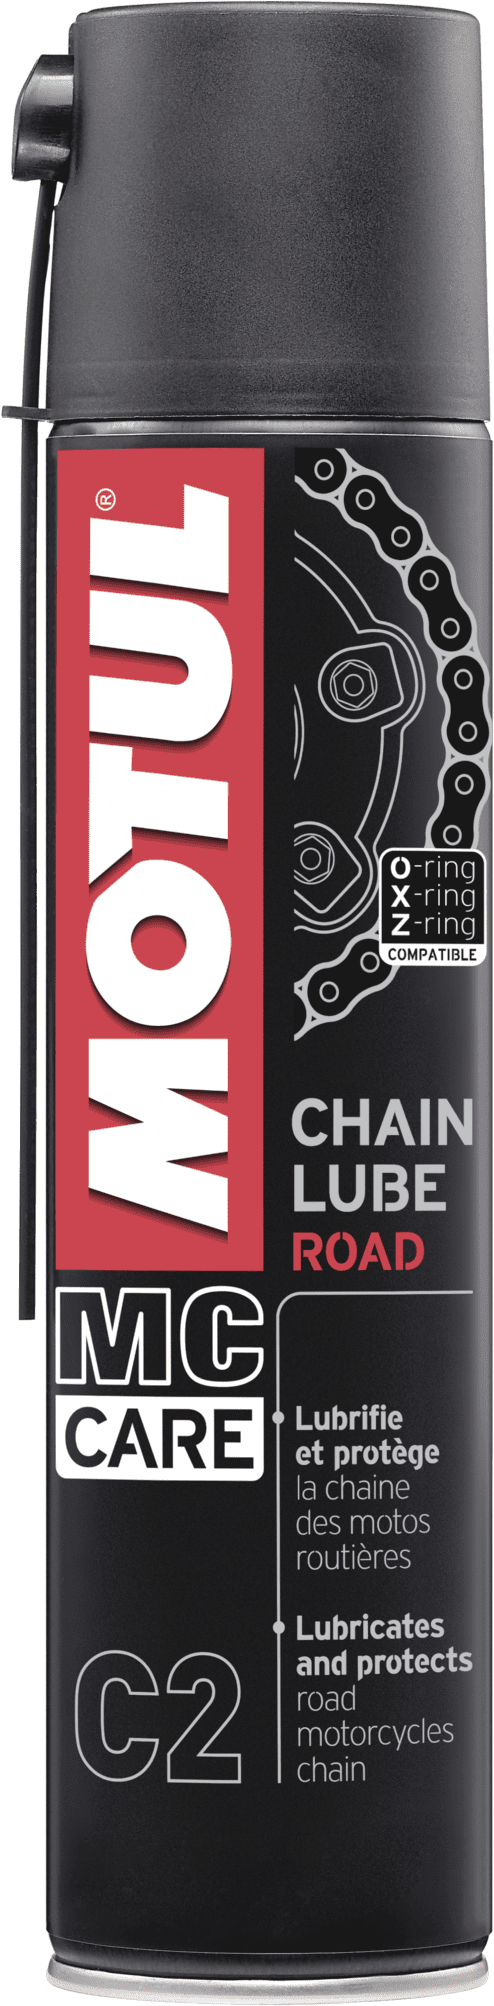 Motul MC Care C2 Chain Lube Road, 400 ml